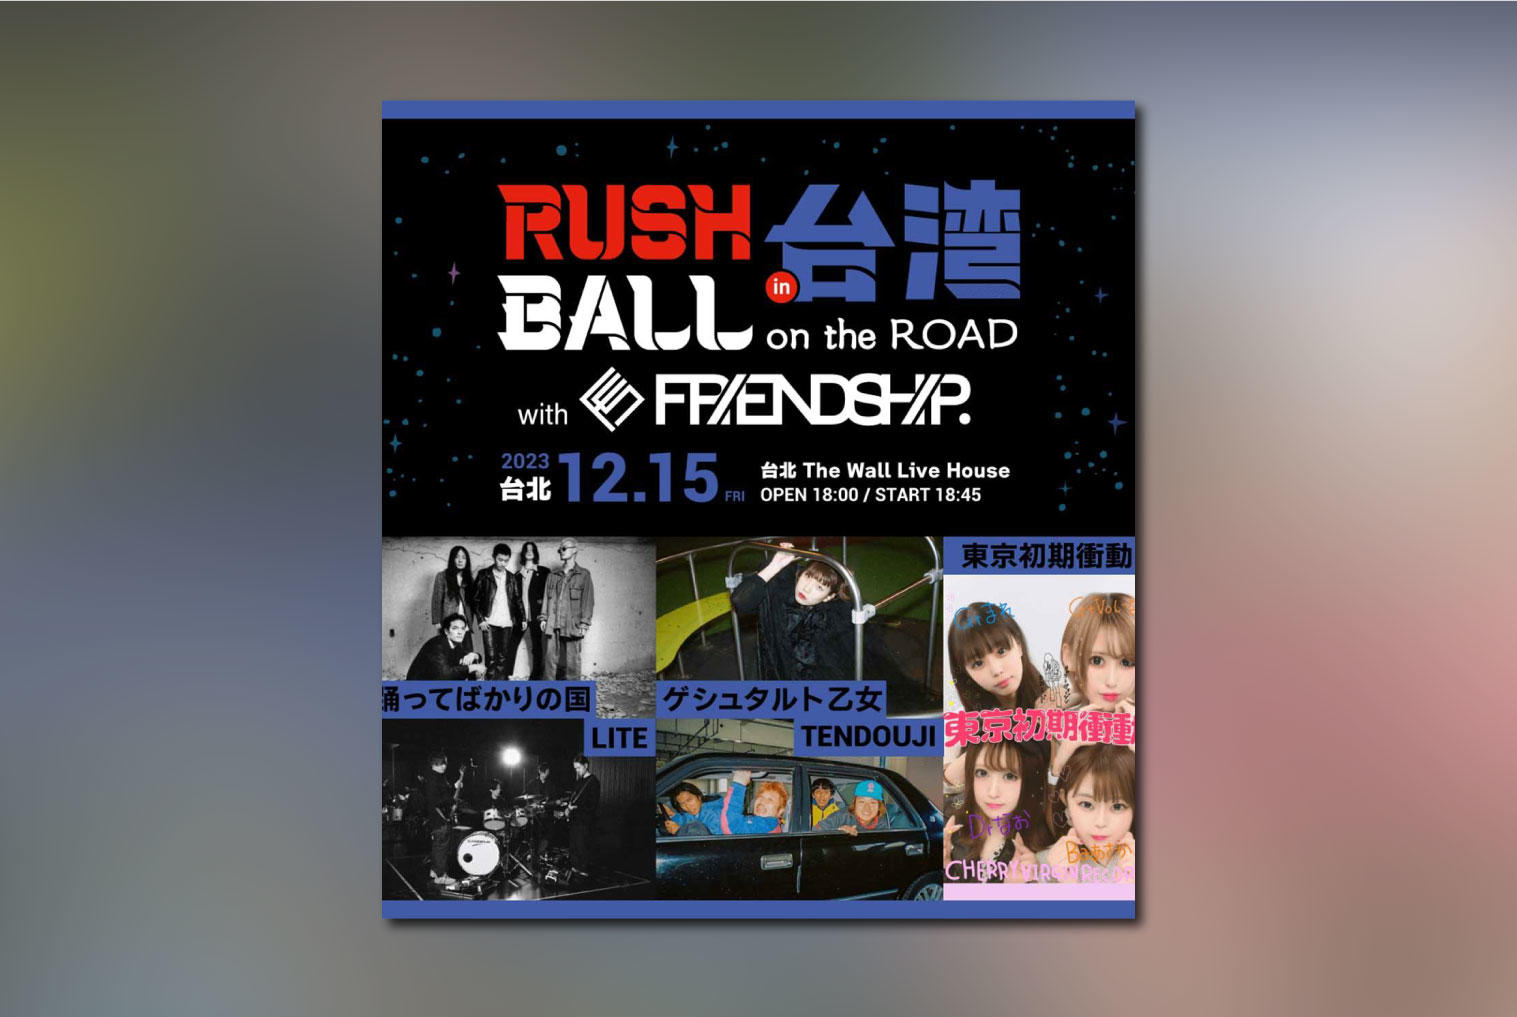 RUSH BALL in 台湾 on the ROAD with FRIENDSHIP.開催。出演アーティストによるコメント&プレイリスト公開！